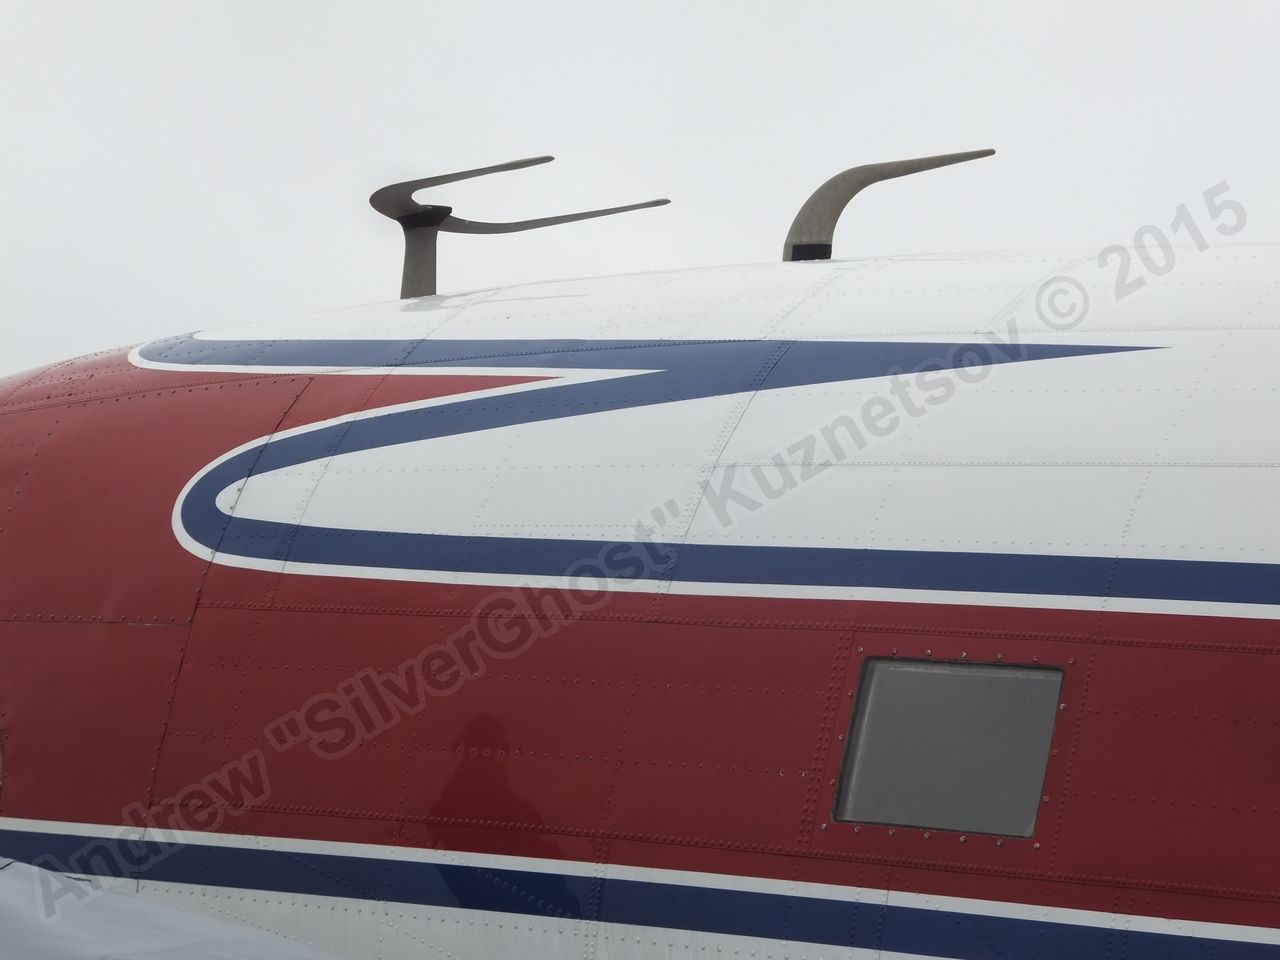 DC-3_Stupino_0026.jpg